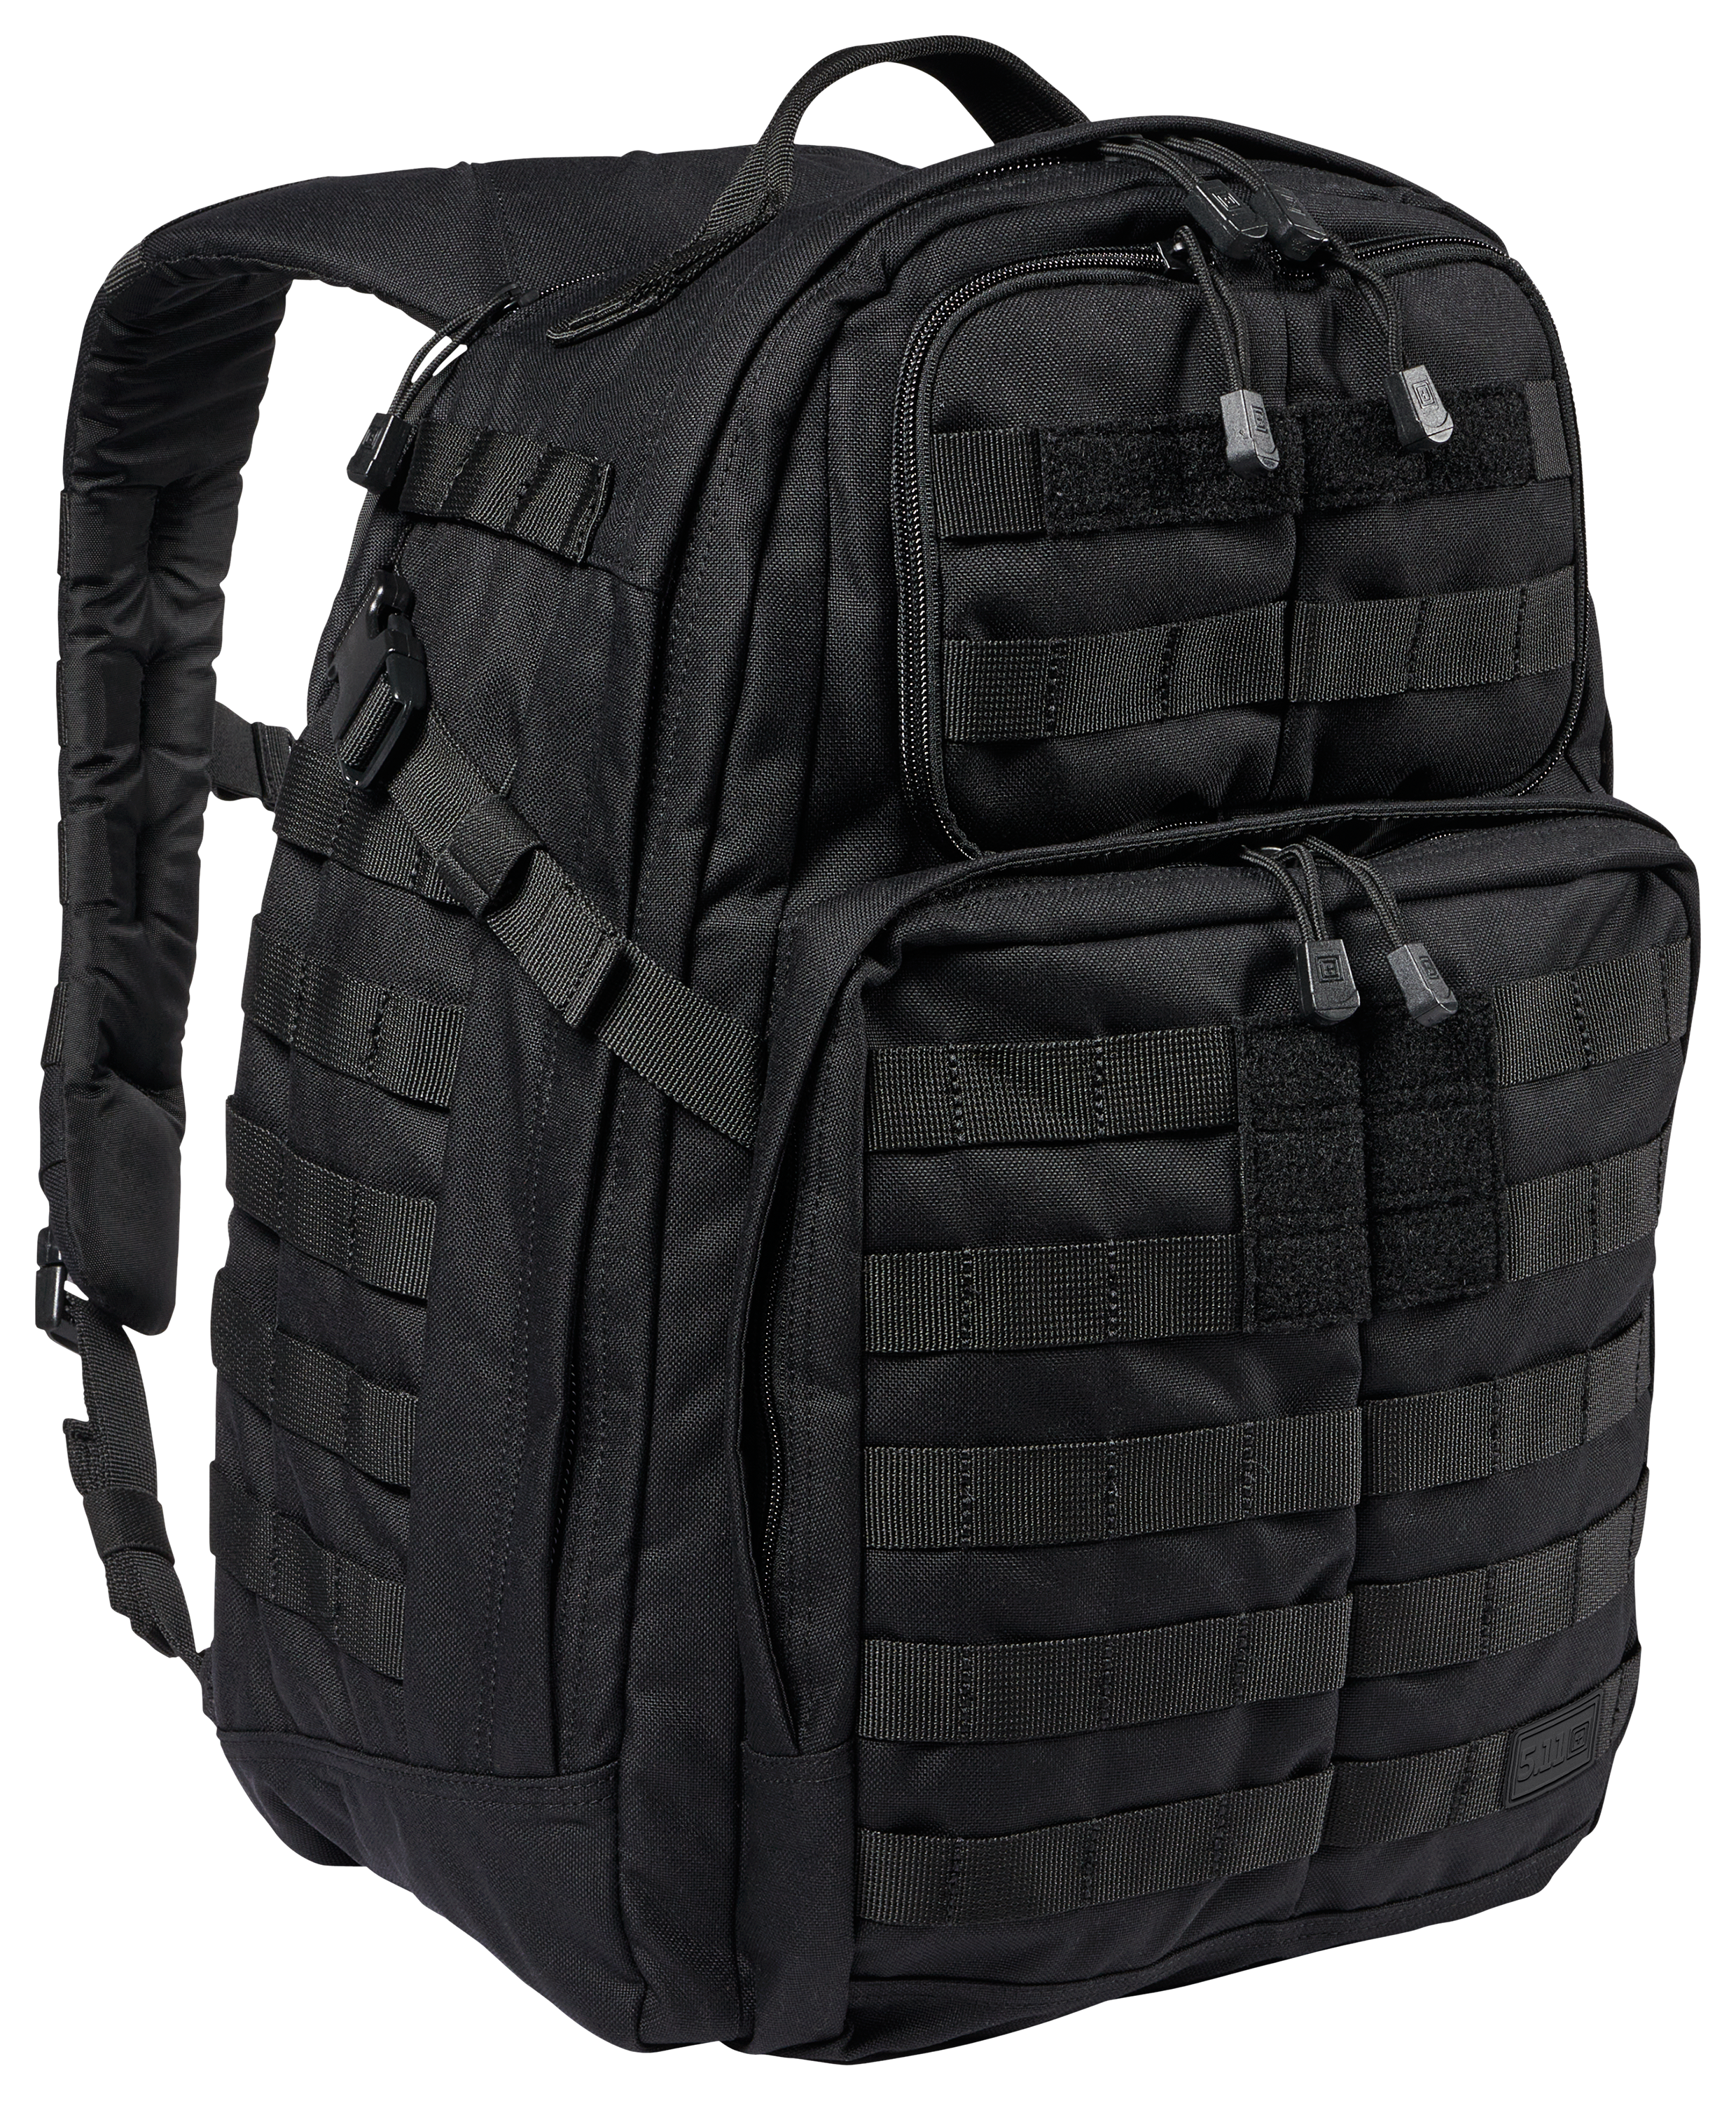 Dropship Excursion Gear Organizer; Backpack Organizer, Utility MOLLE Bag  Pouch